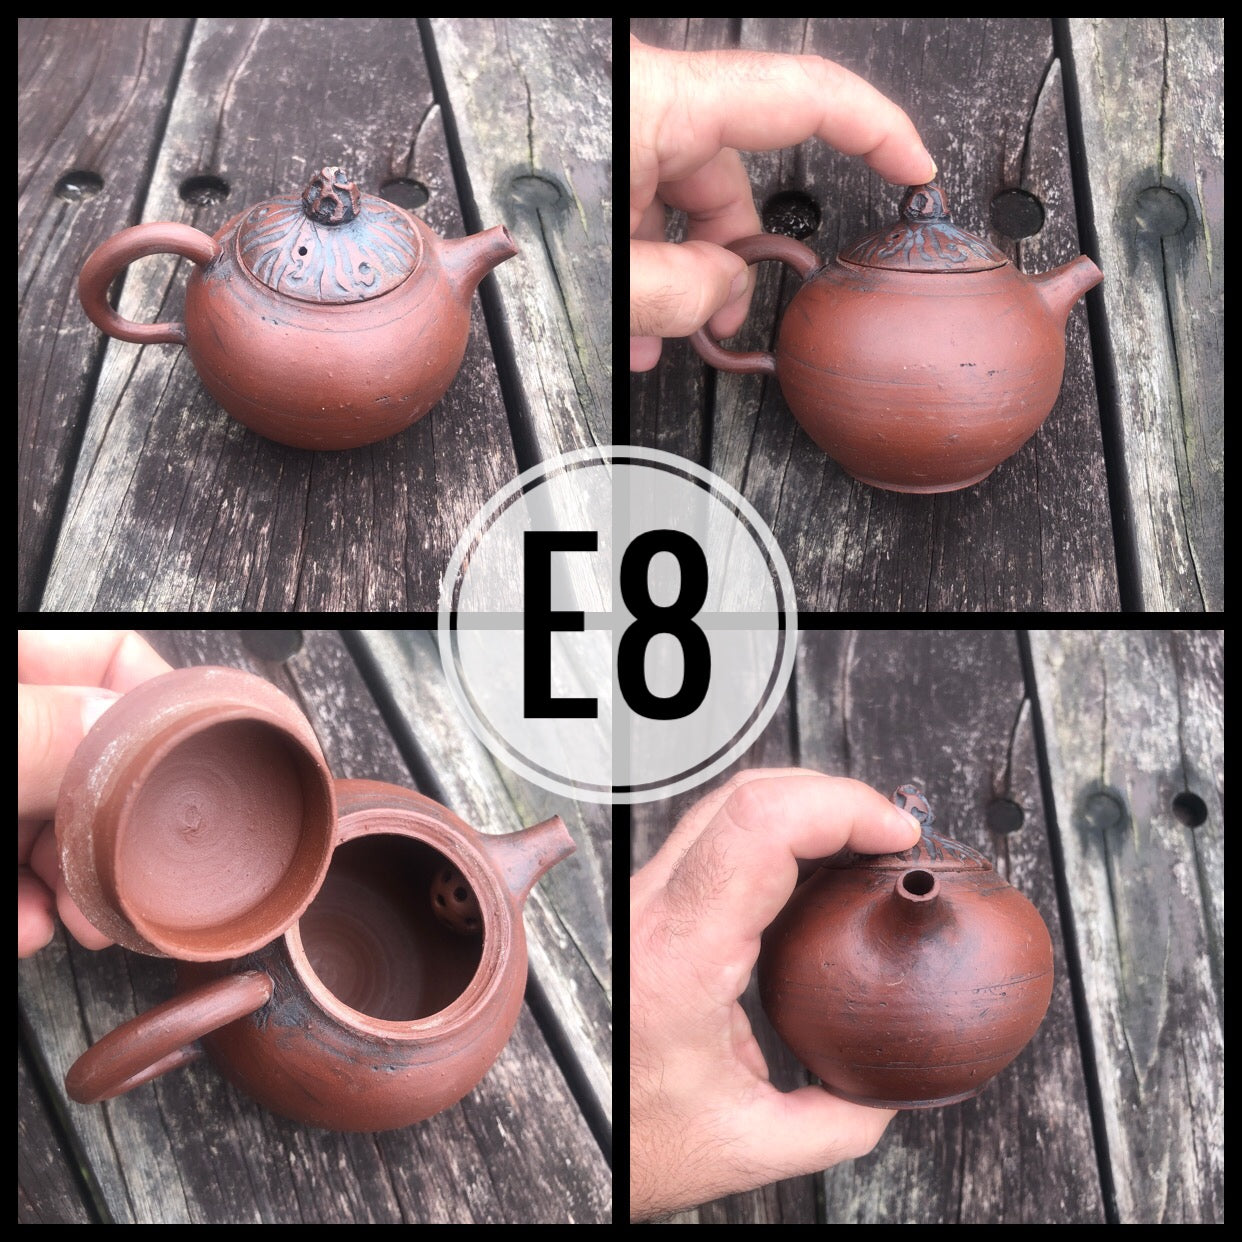 Hualien Clay Handmade Tea Pots